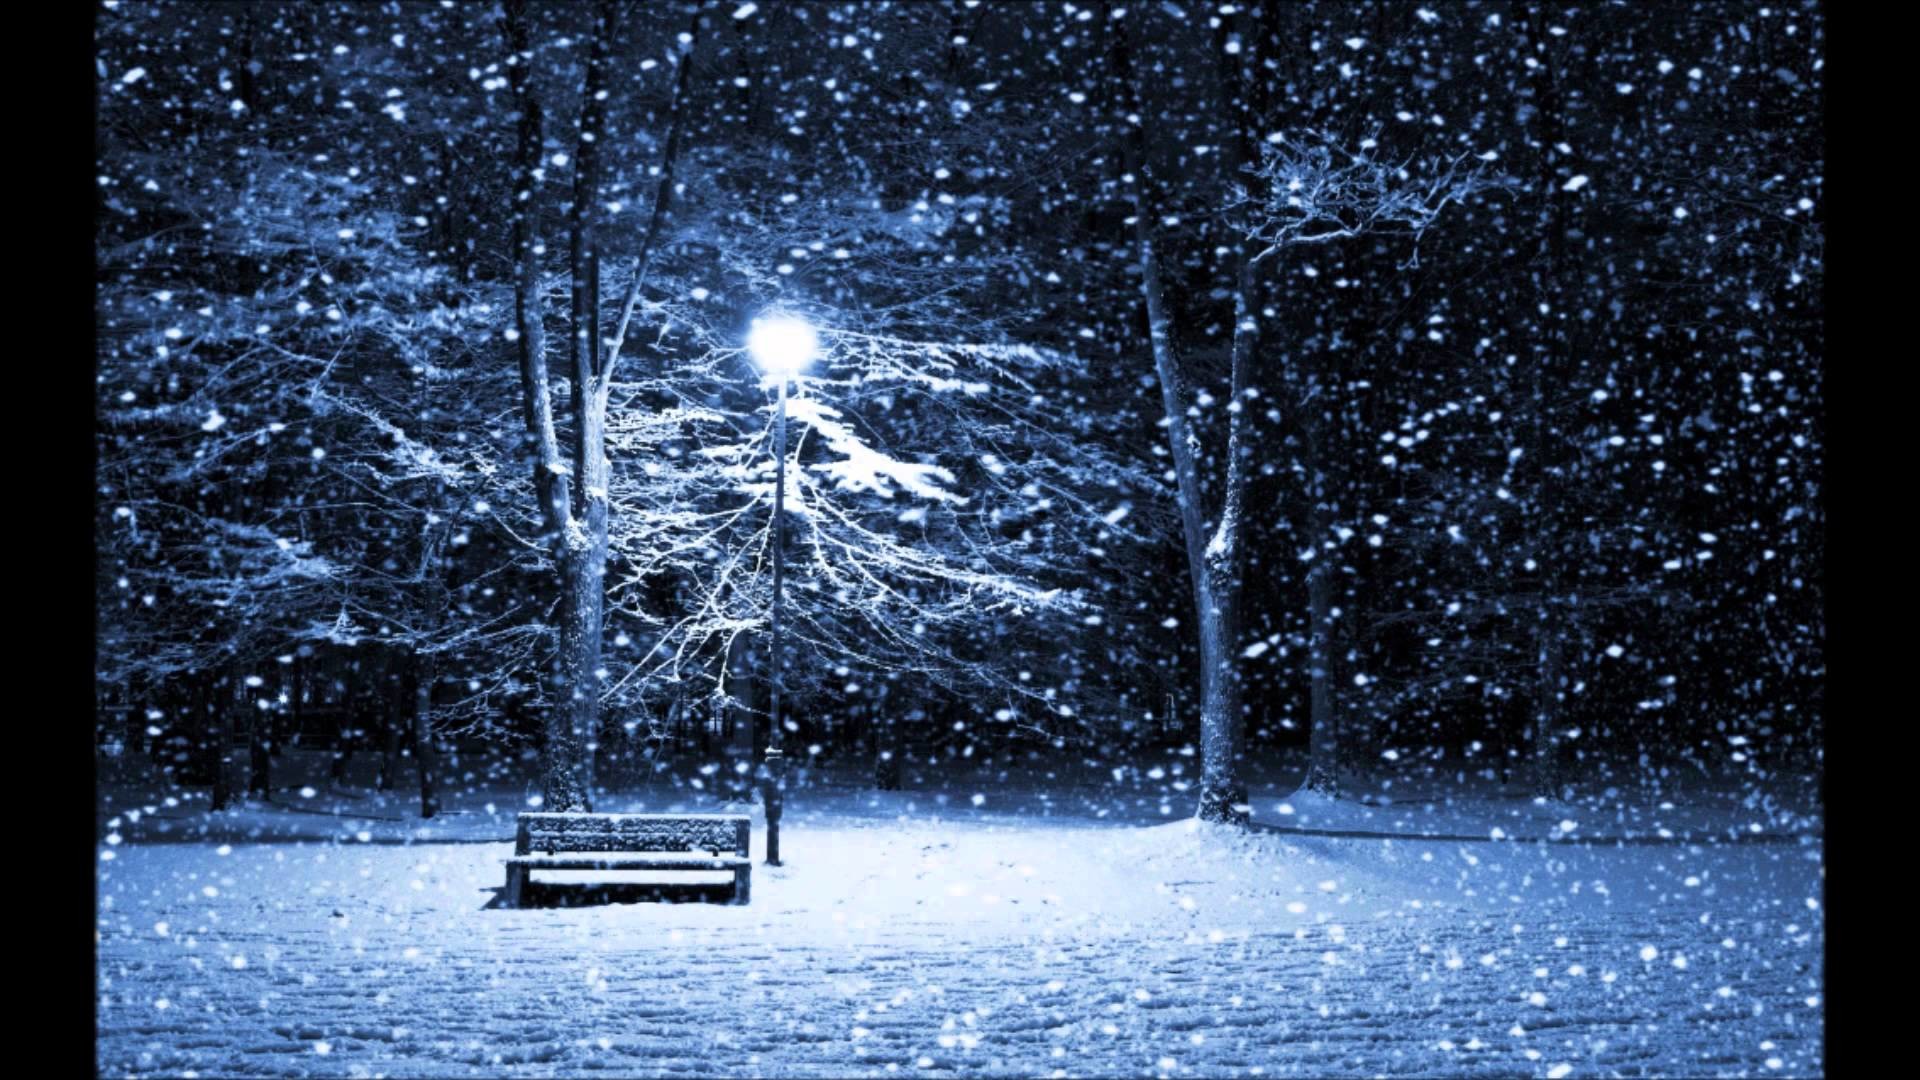 1920x1080 ... Snow Falling At Night